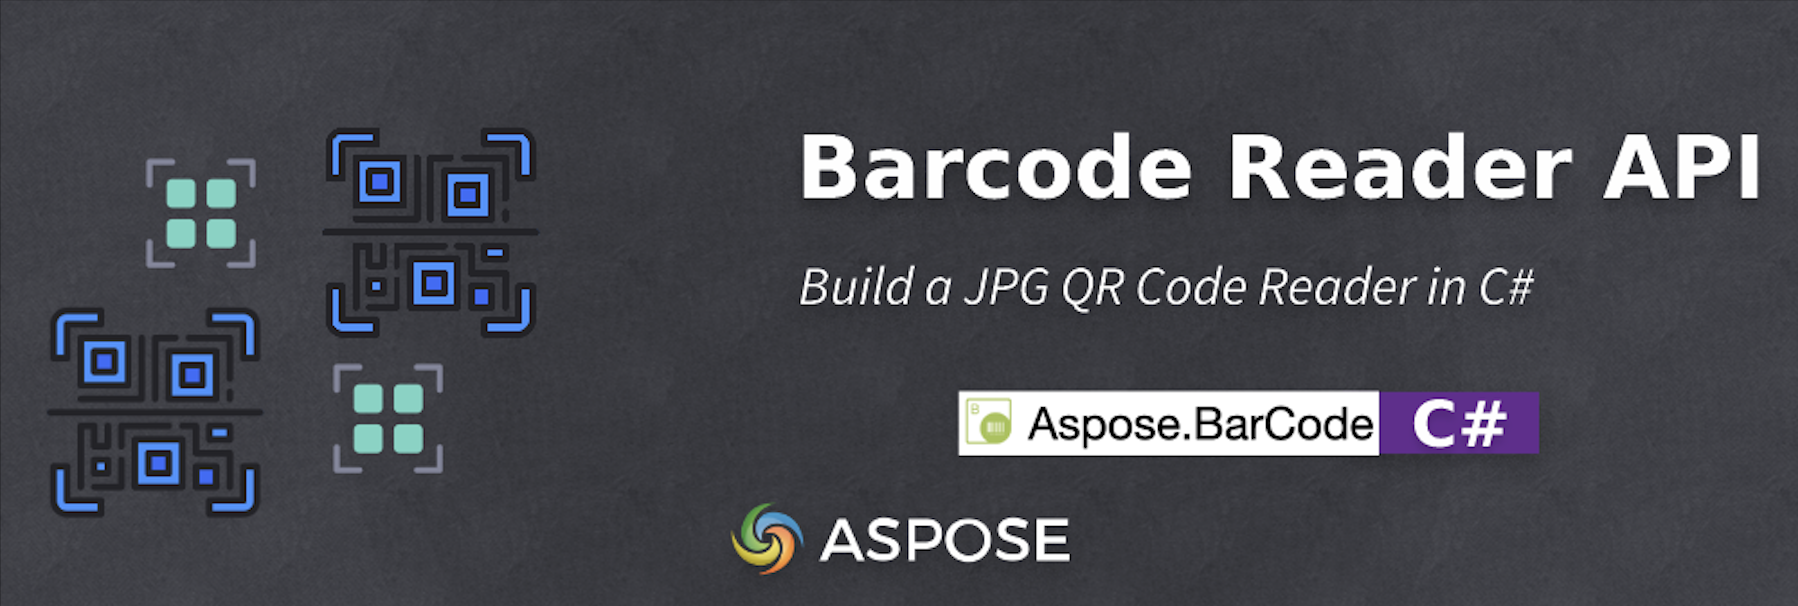 JPG QR Code Reader in C# - Barcode Scanner Online 